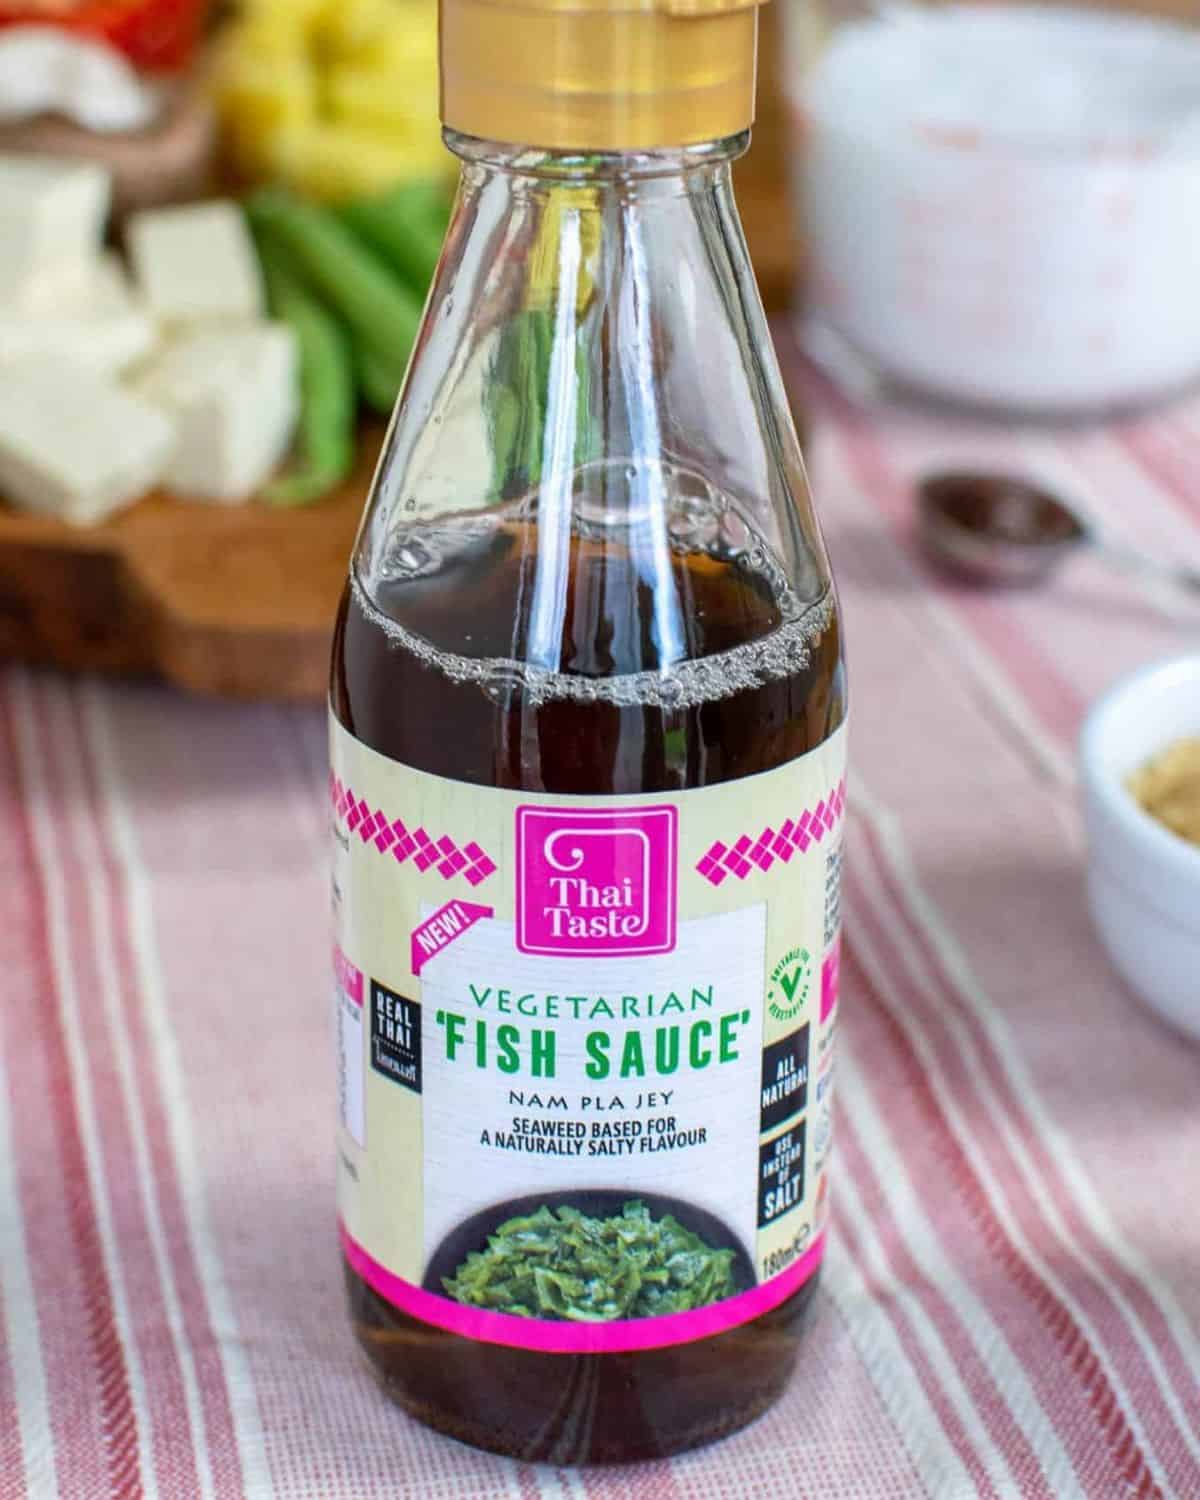 A bottle of Thai Taste vegan fish sauce.